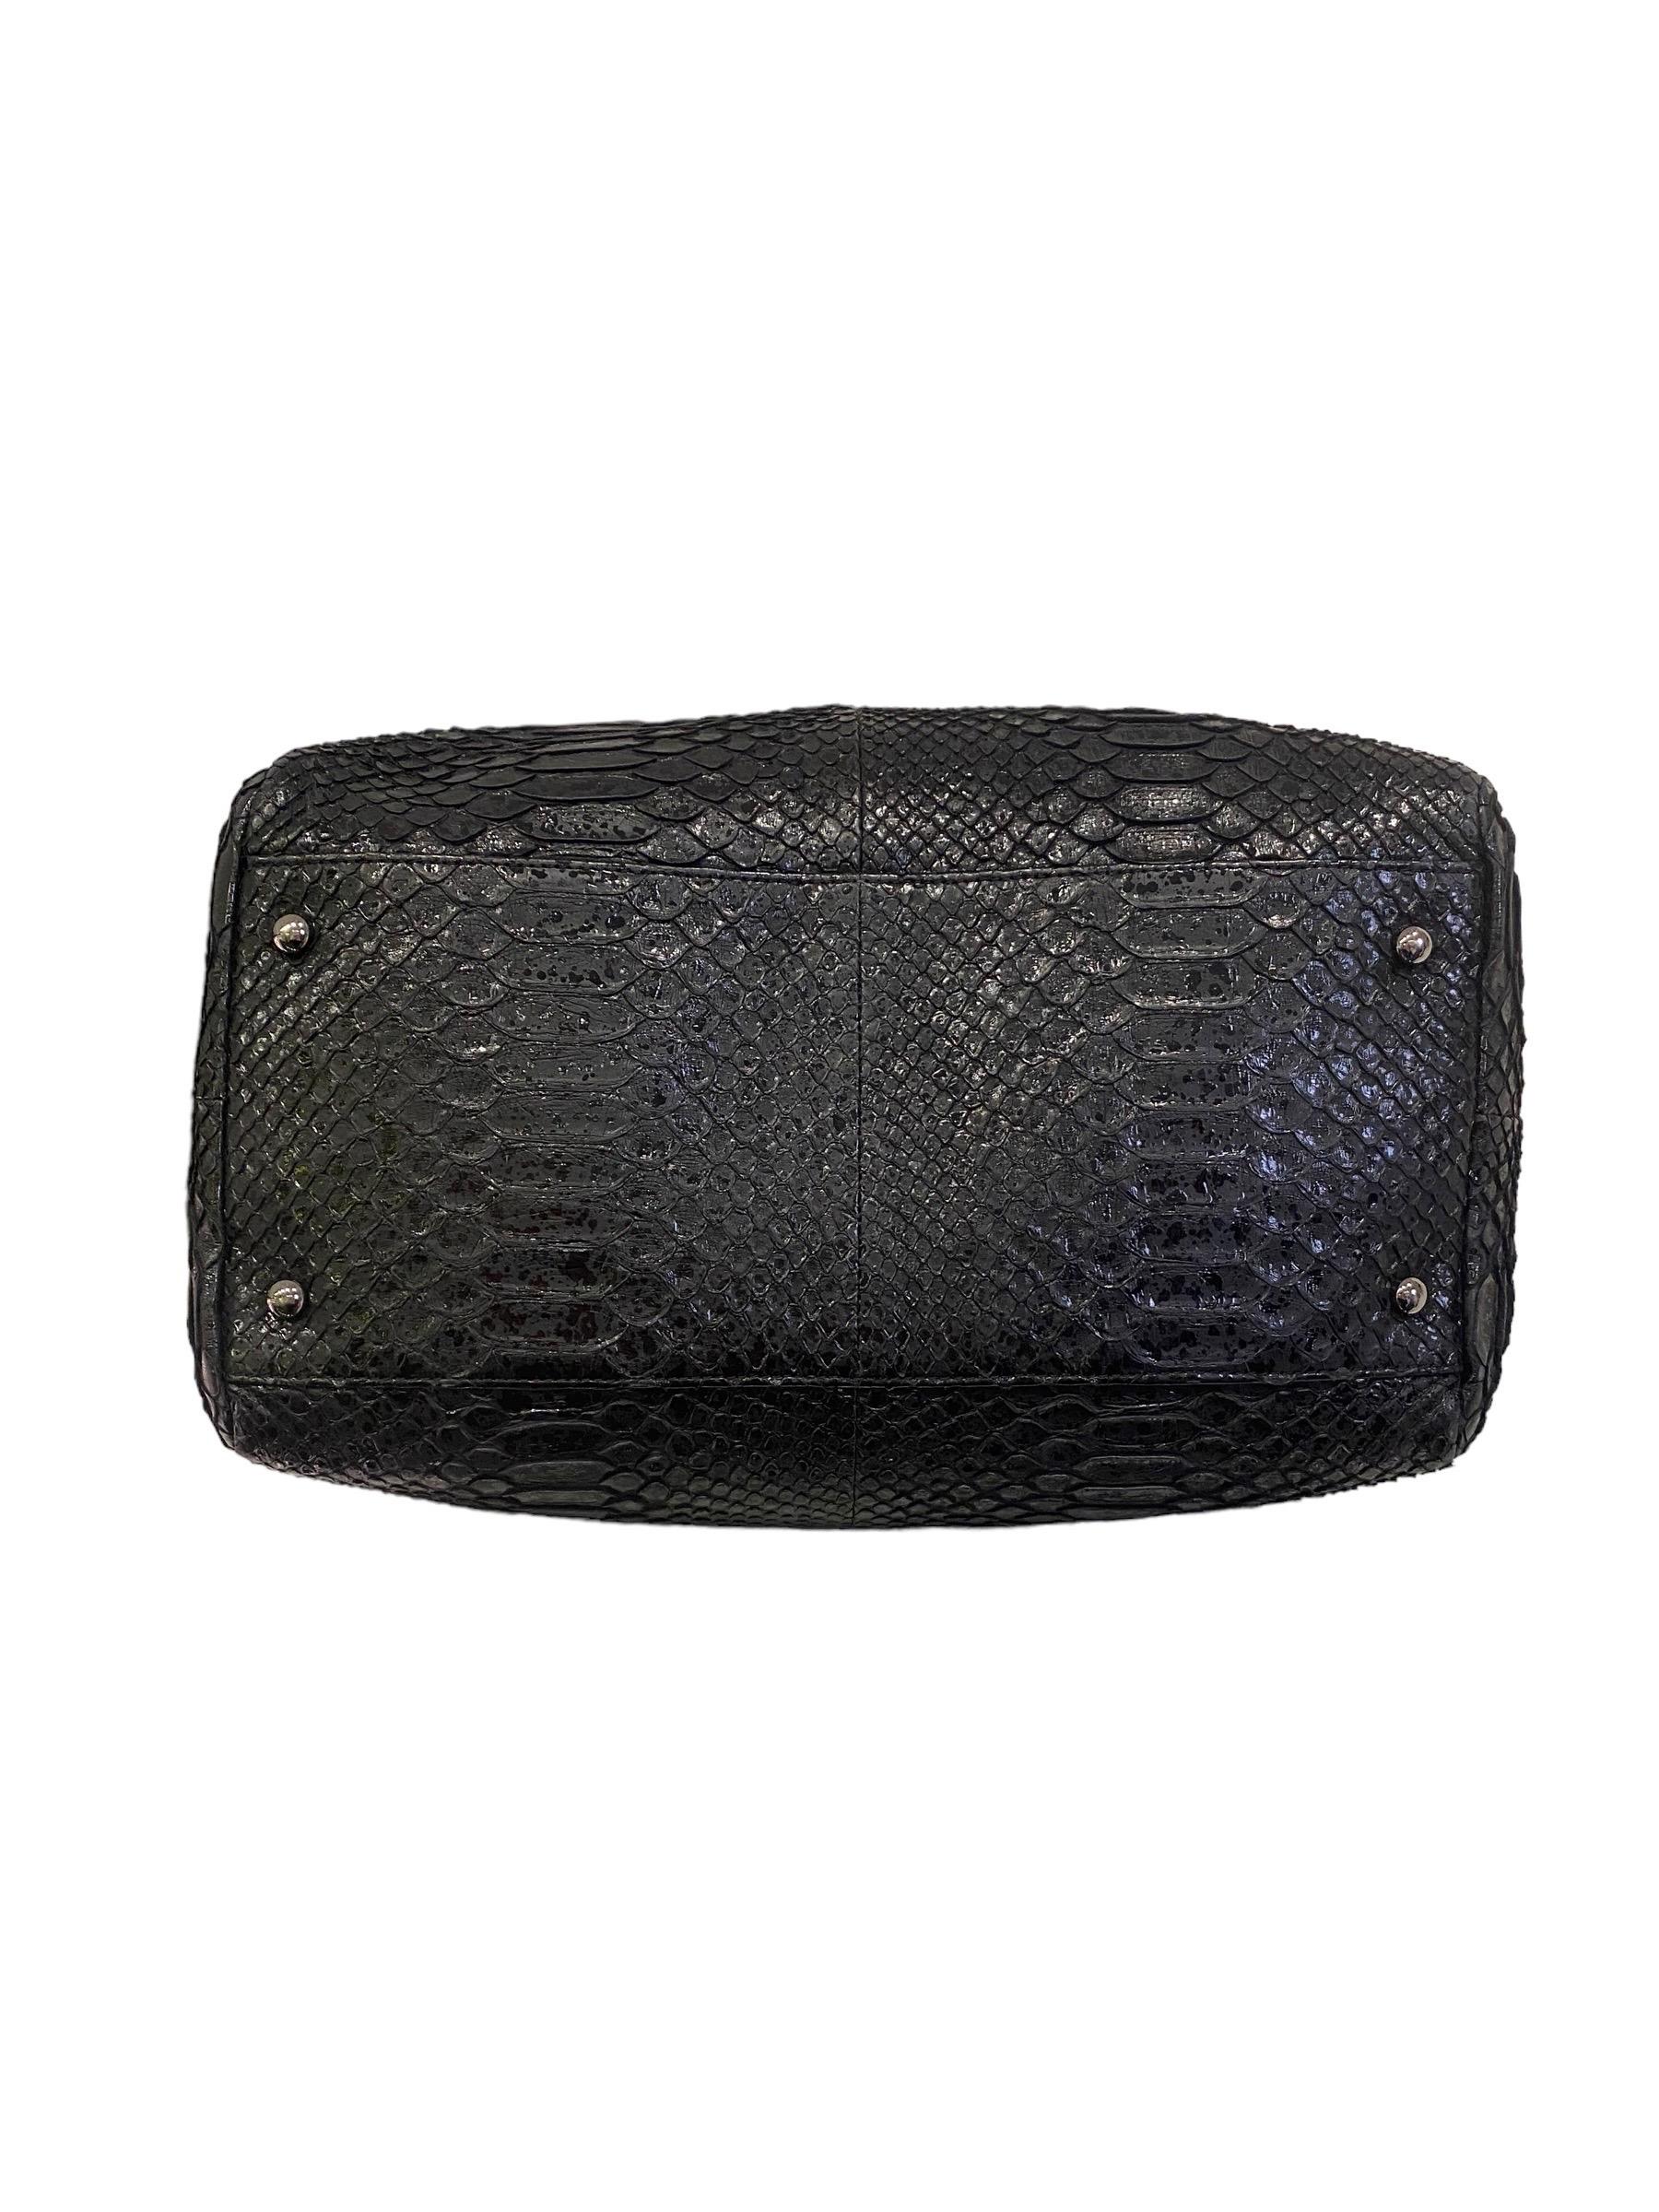 2009 Chanel Tote Black Piton Hobo Bag For Sale 3